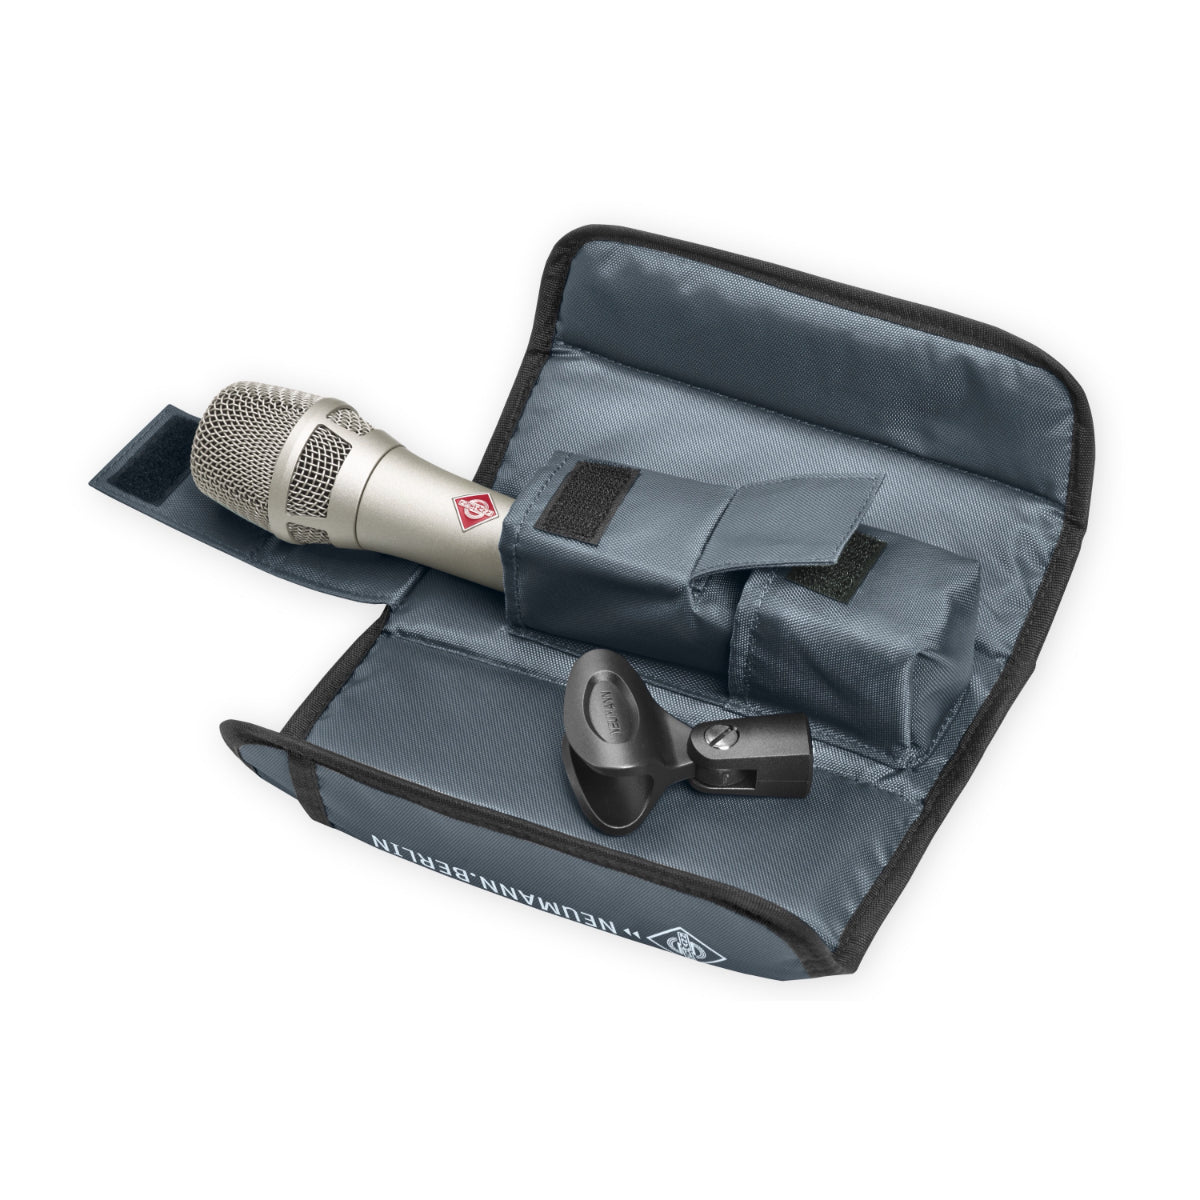 Neumann KMS 105 Vocalist Microphone, Super Cardioid, Nickel, Condenser Mic Capsule